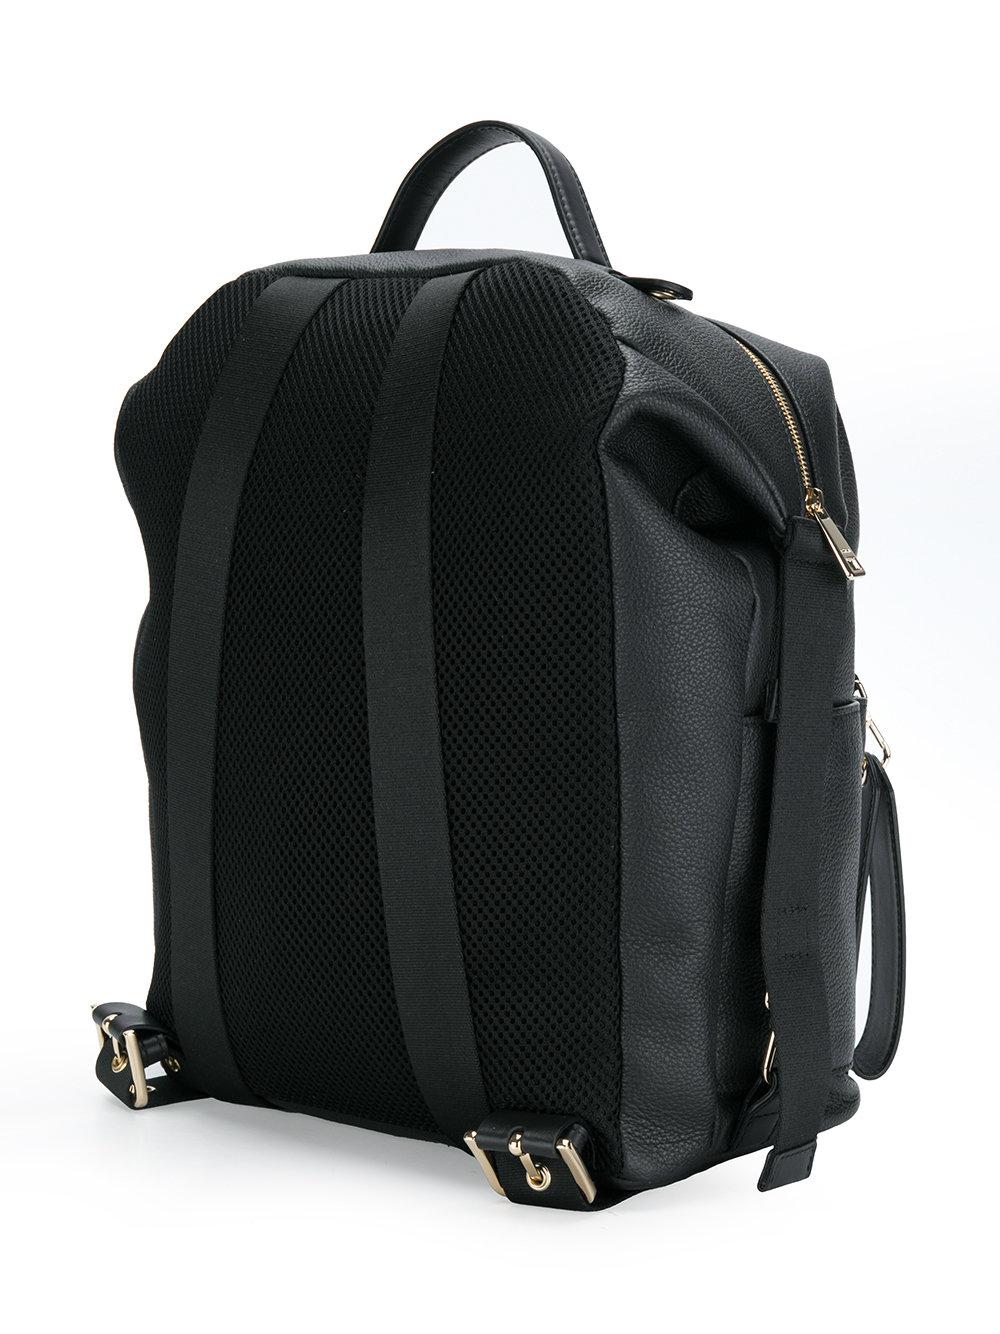 Furla Leather Dafne Avatar Backpack in Black - Lyst